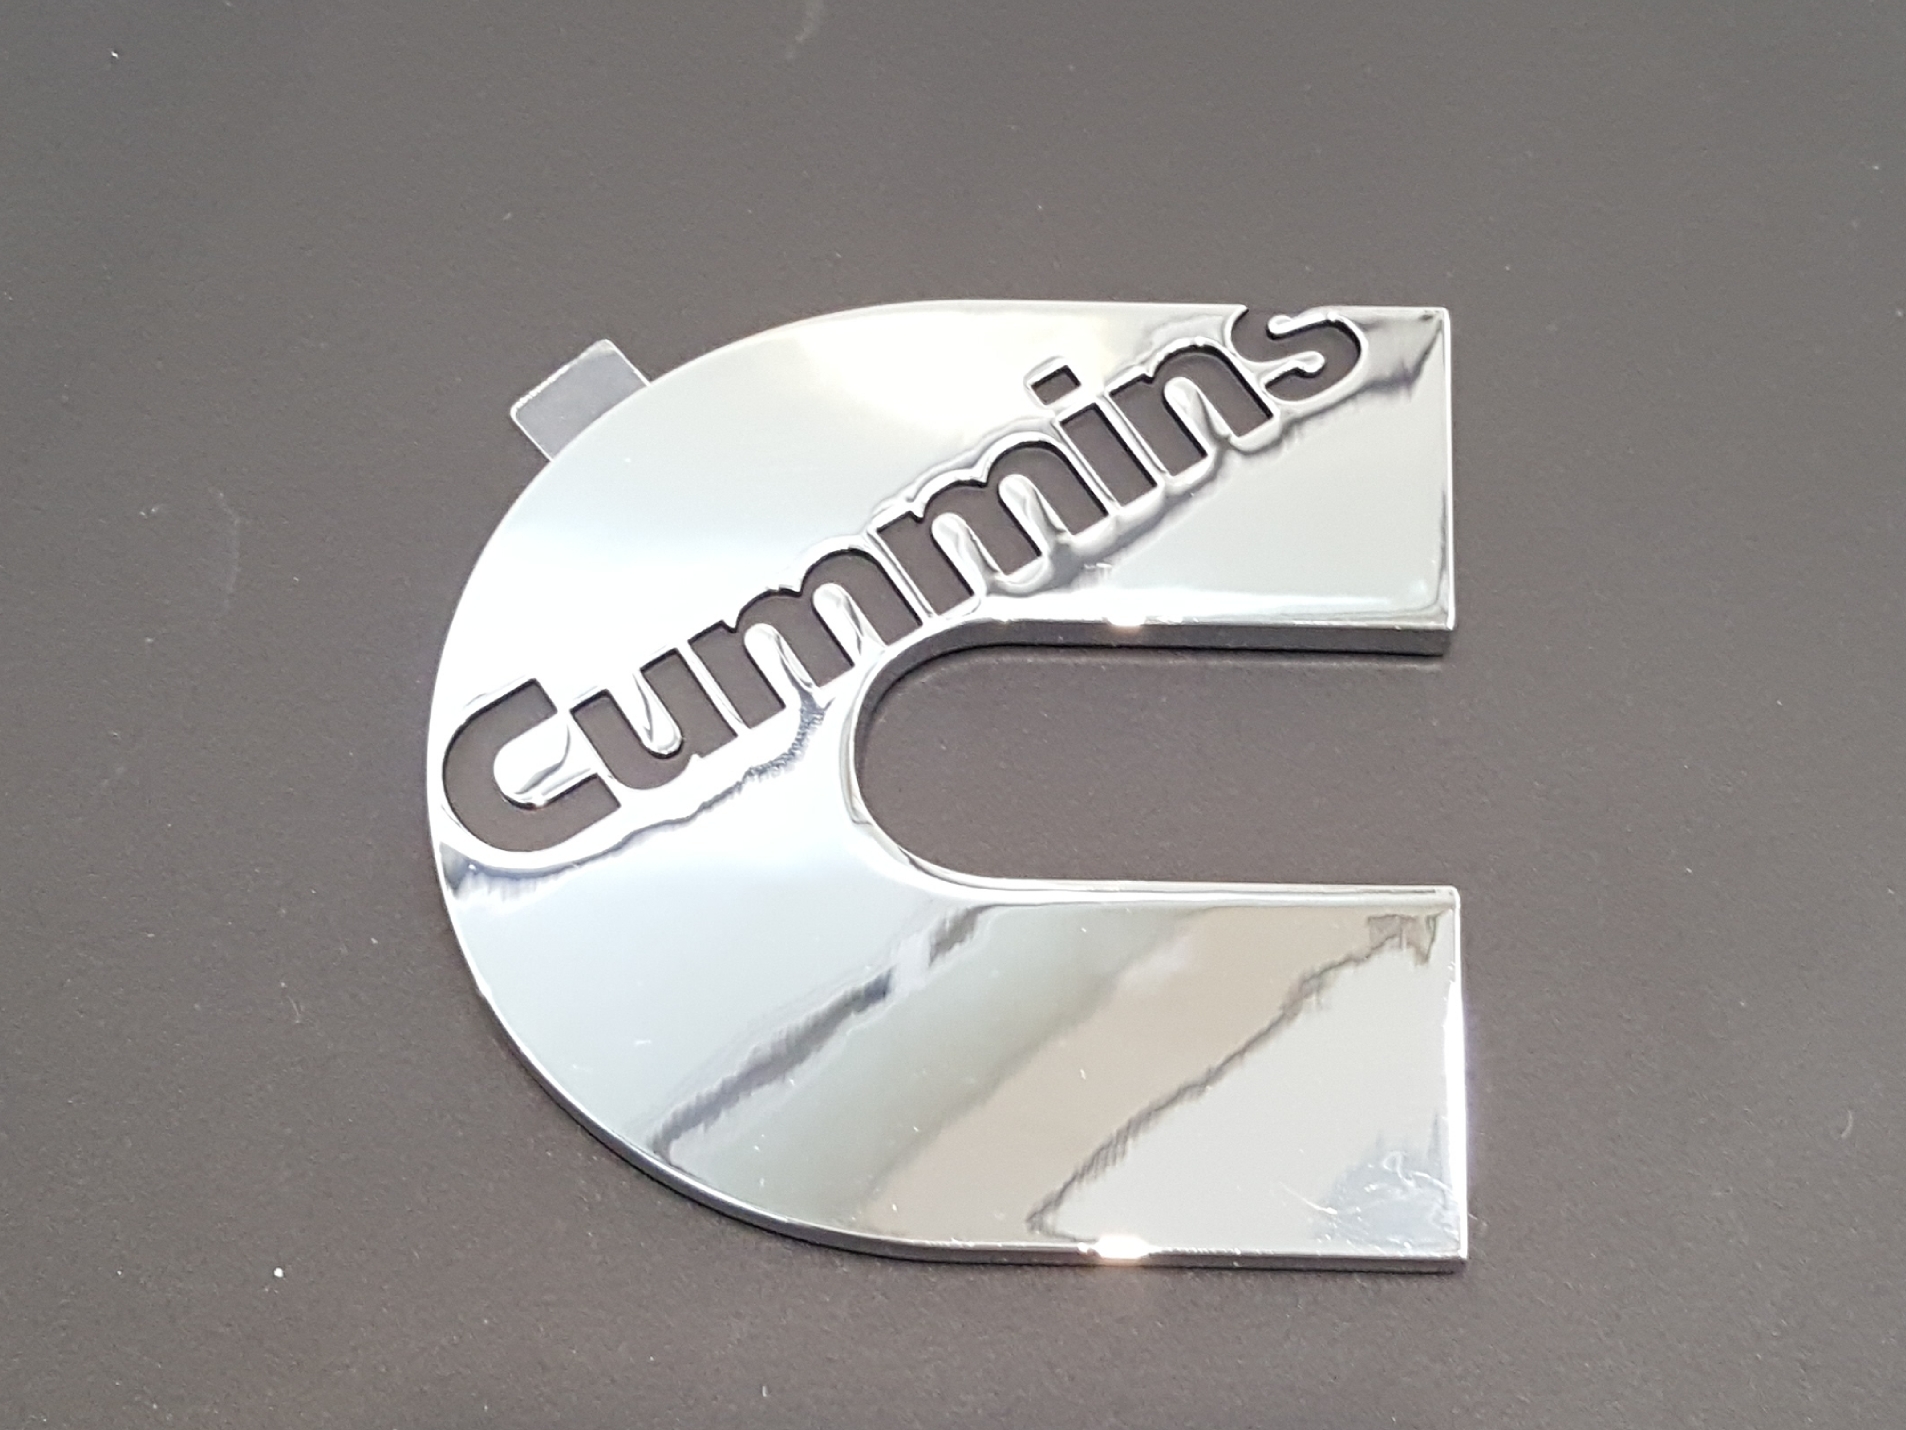 Cummins Vehicle Badge 3 x 3 inch - 5633389 - Shop Cummins